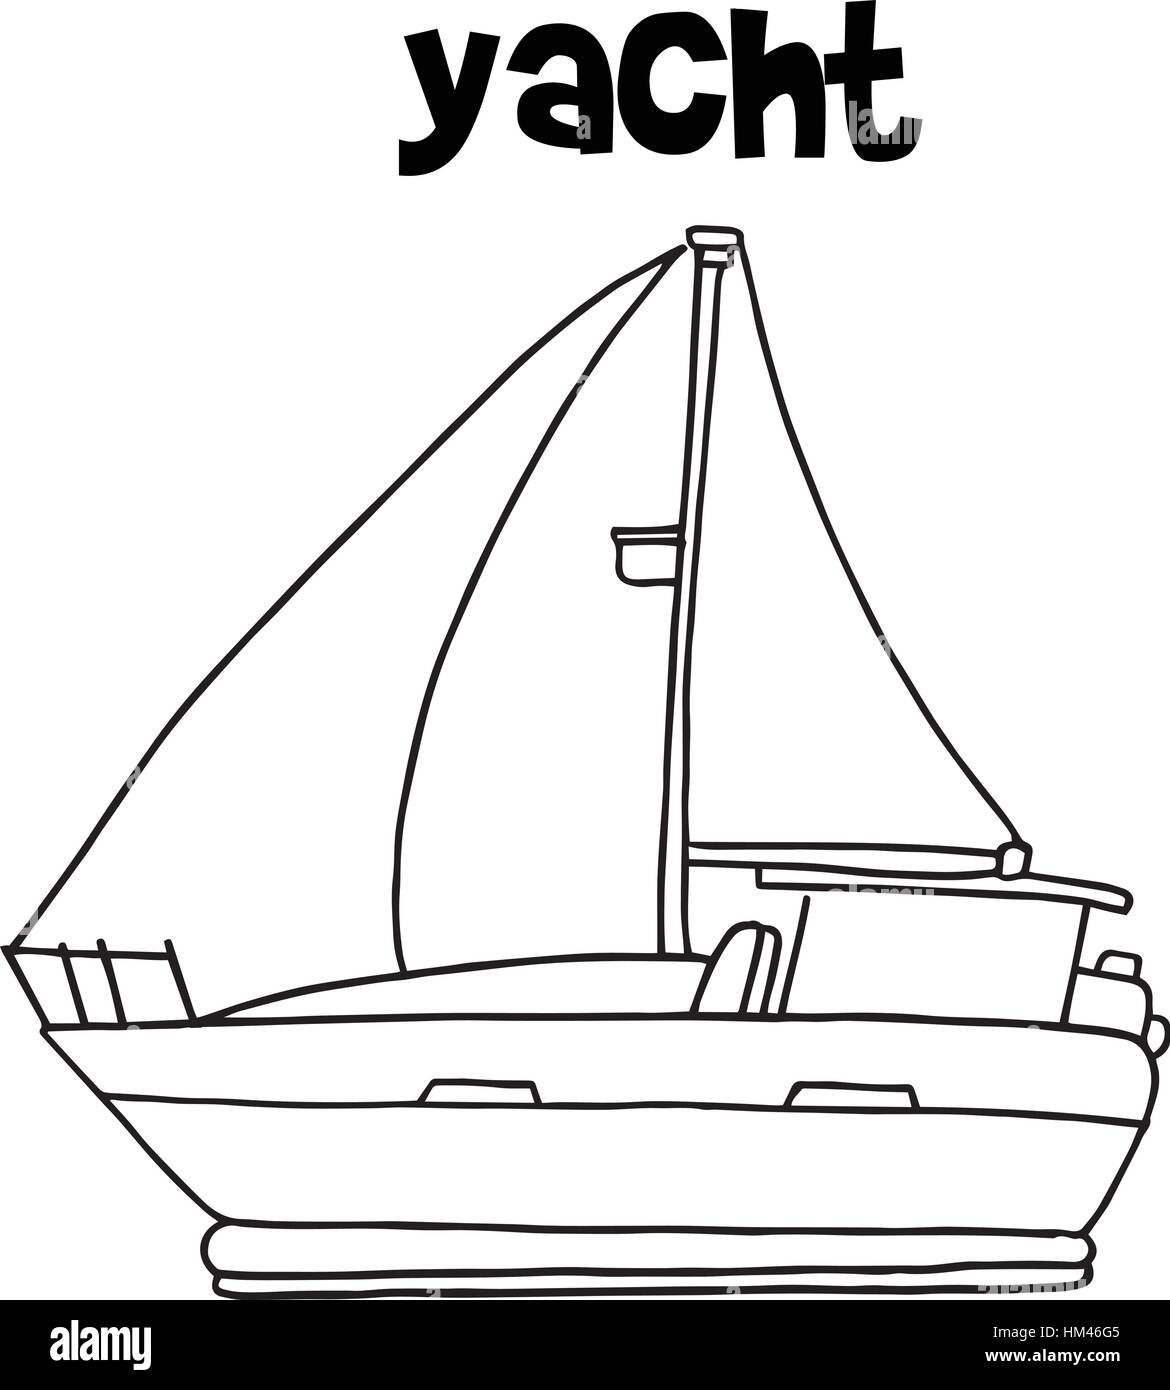 Hand Drawn Sketch Yacht Vector illustration Stock Vector Image & Art - Alamy